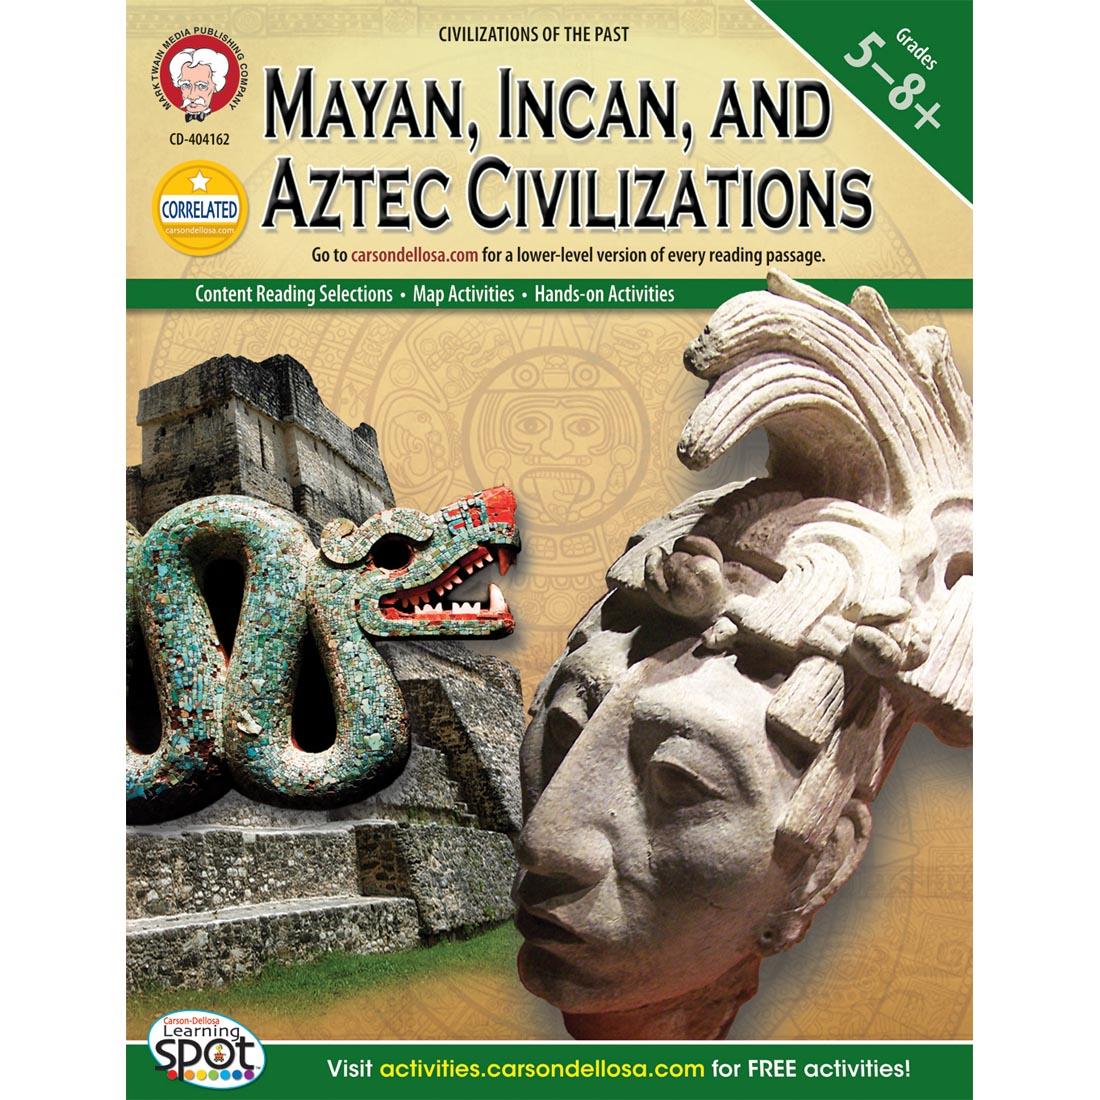 Mayan, Incan, and Aztec Civilizations by Mark Twain Media